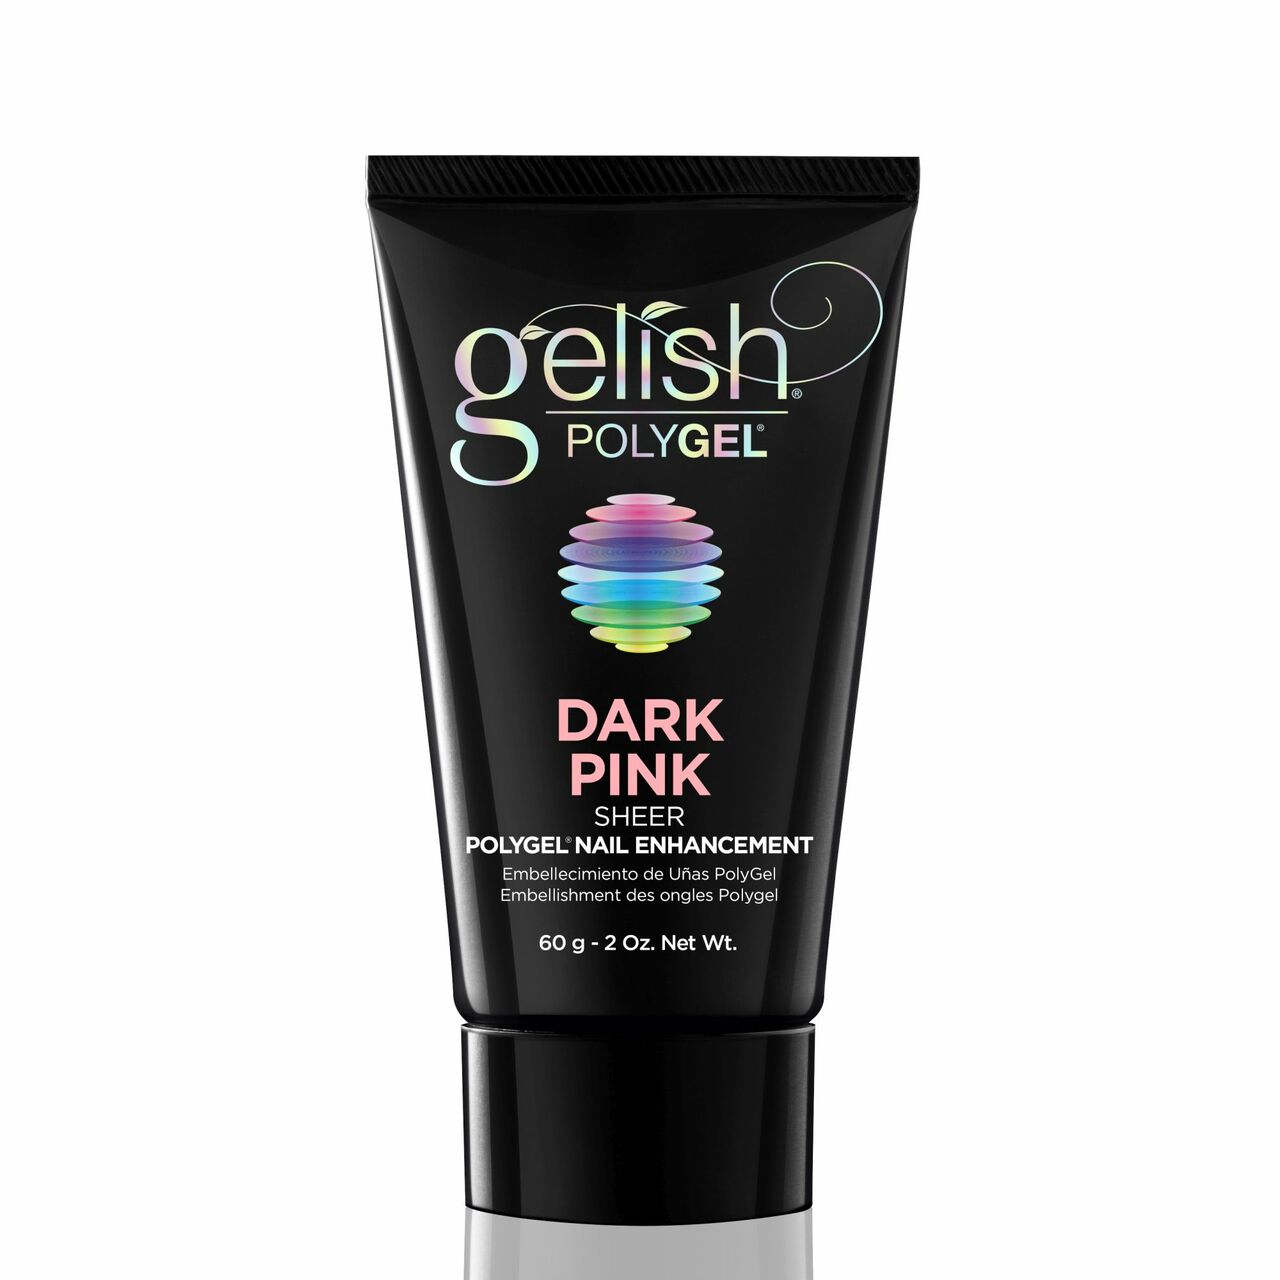 Gelish Polygel - Dark Pink 2 oz